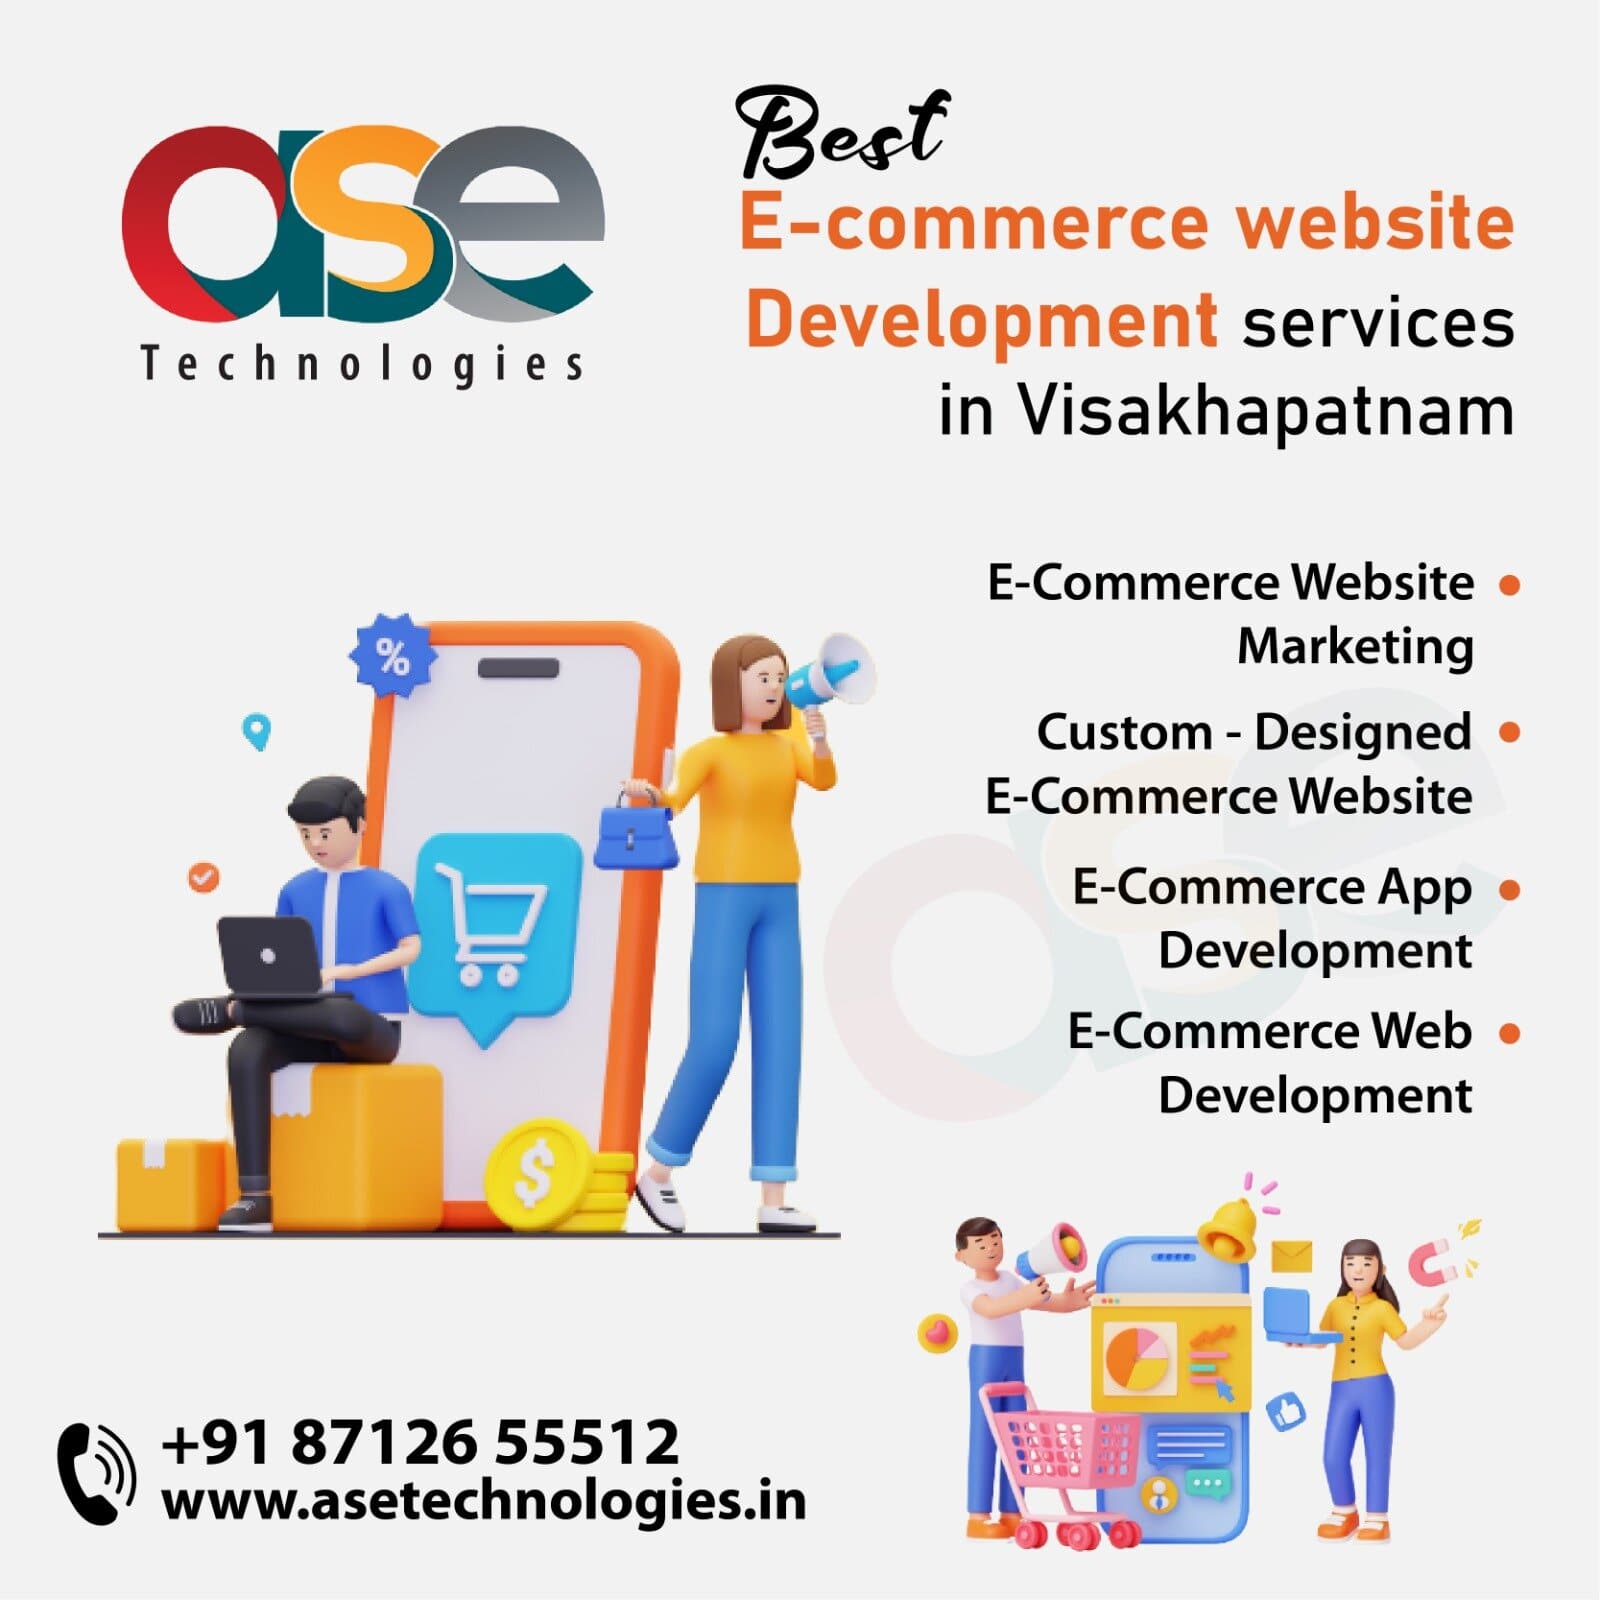 Best E-commerce website development services in Visakhapatnam